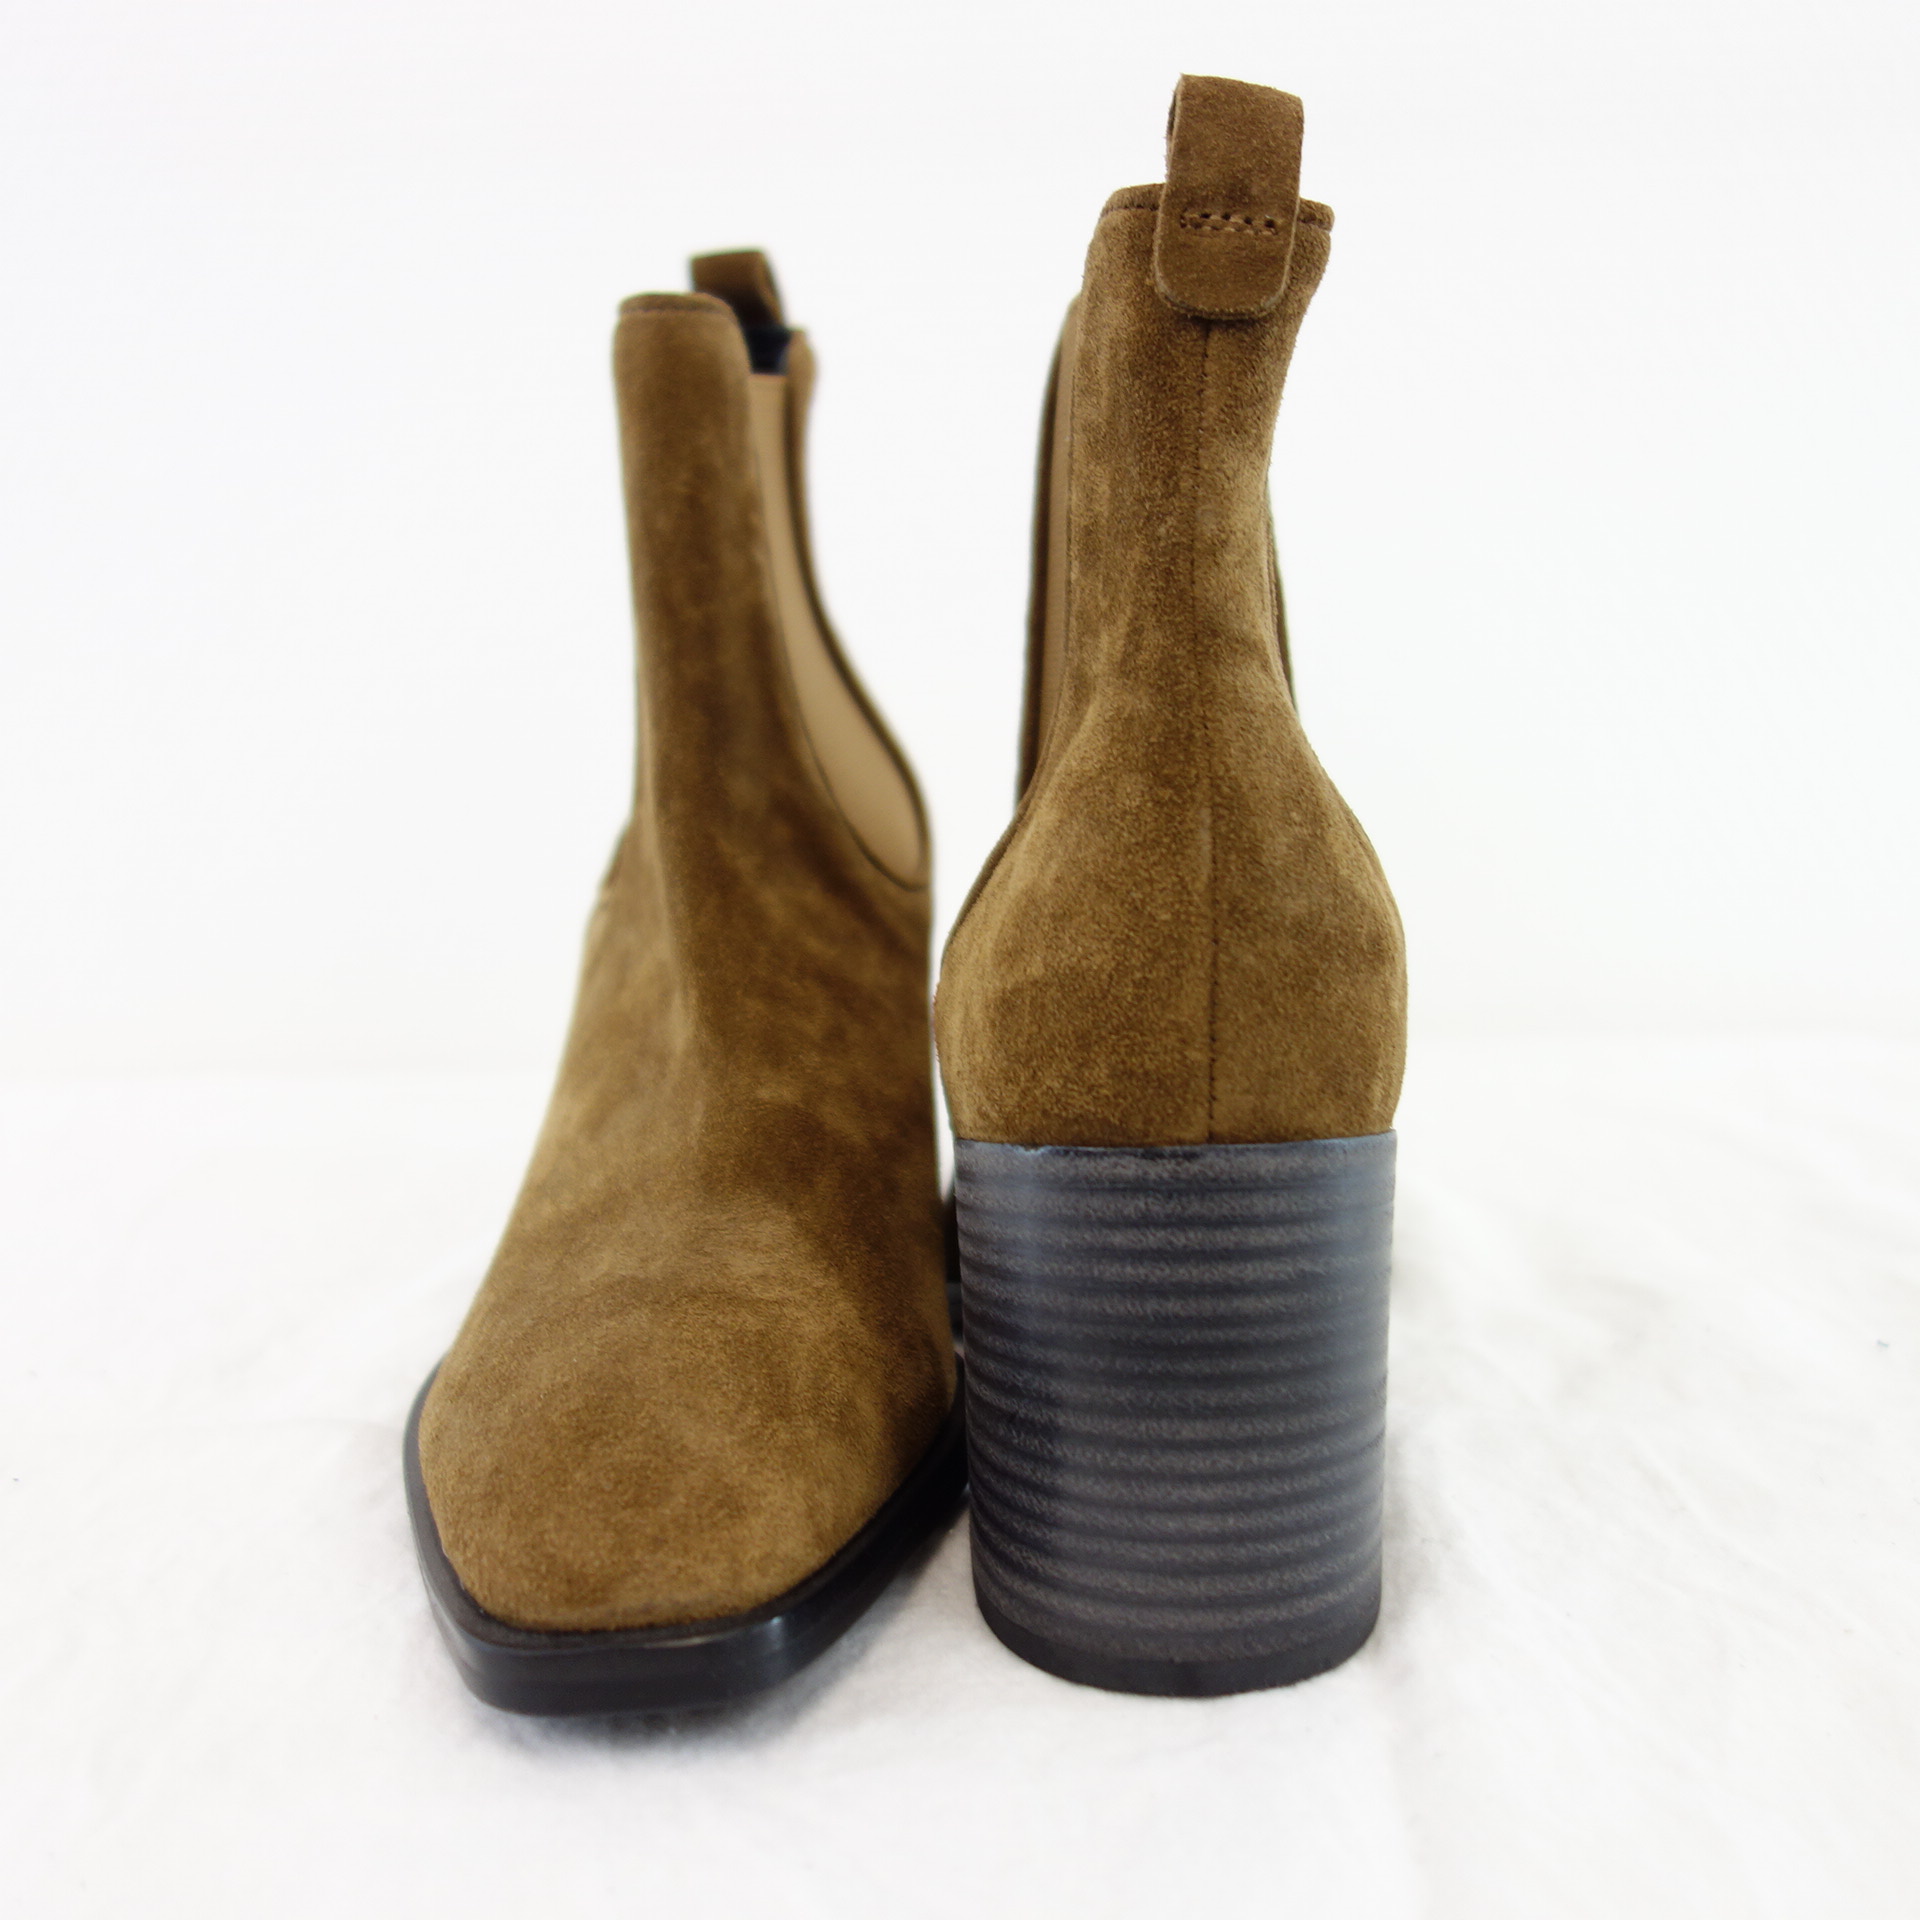 KENNEL & SCHMENGER Damen Schuhe Damenschuhe Chelsea Stiefeletten Boots Stiefel Leder Braun 